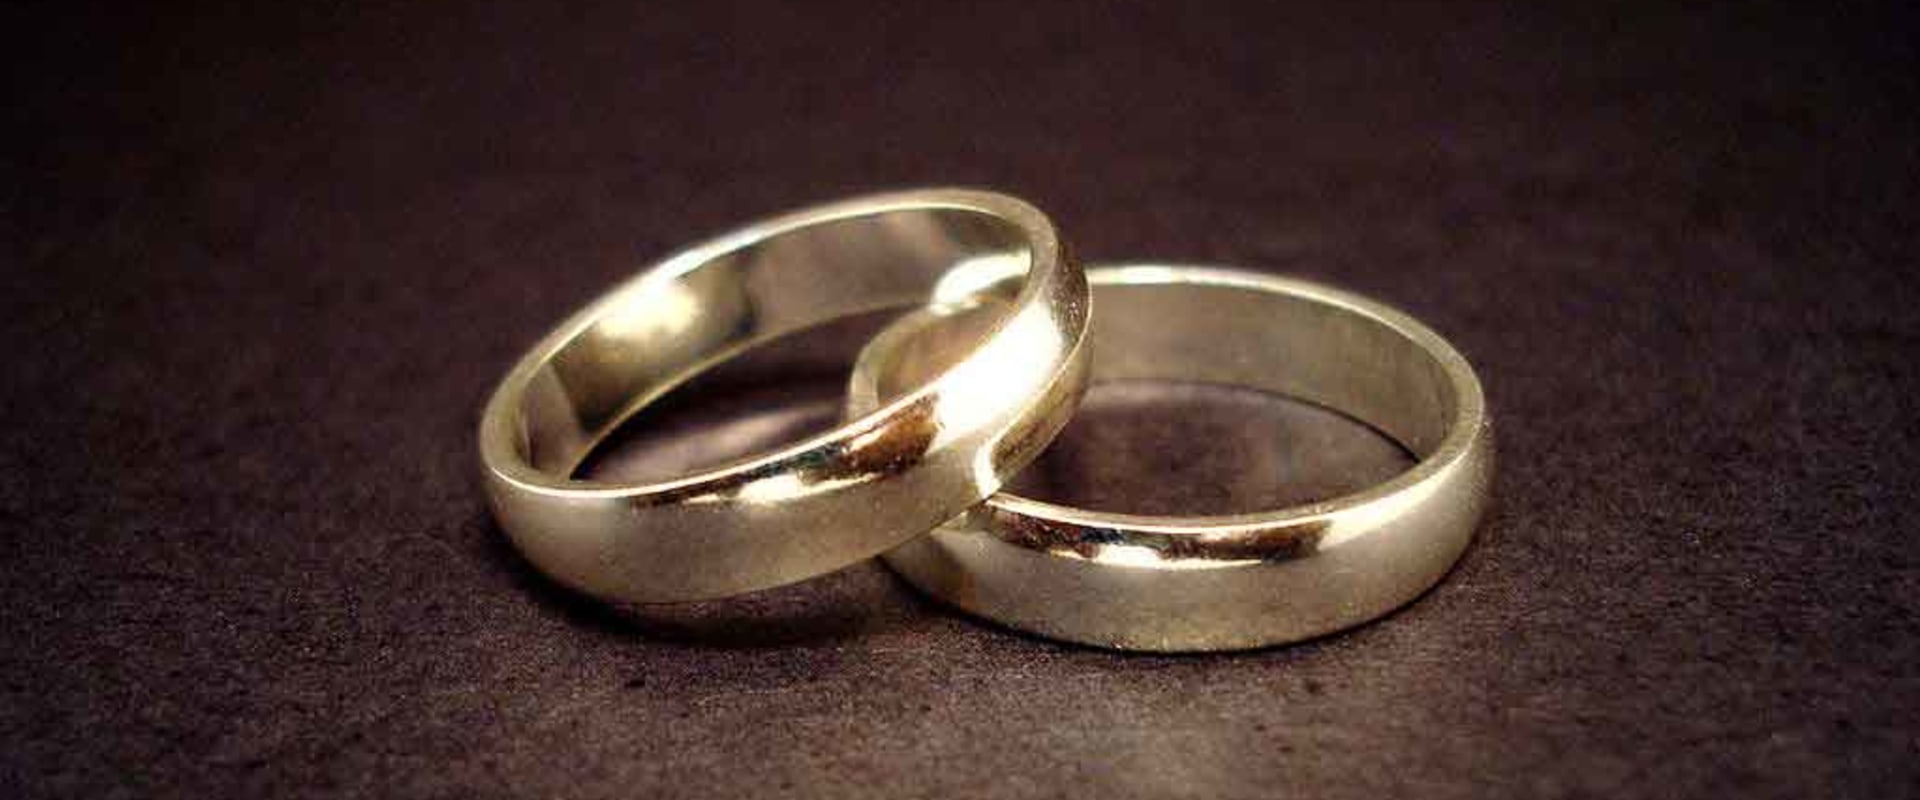 3 Types of Marriage: Monogamy, Polygamy and Endogamy